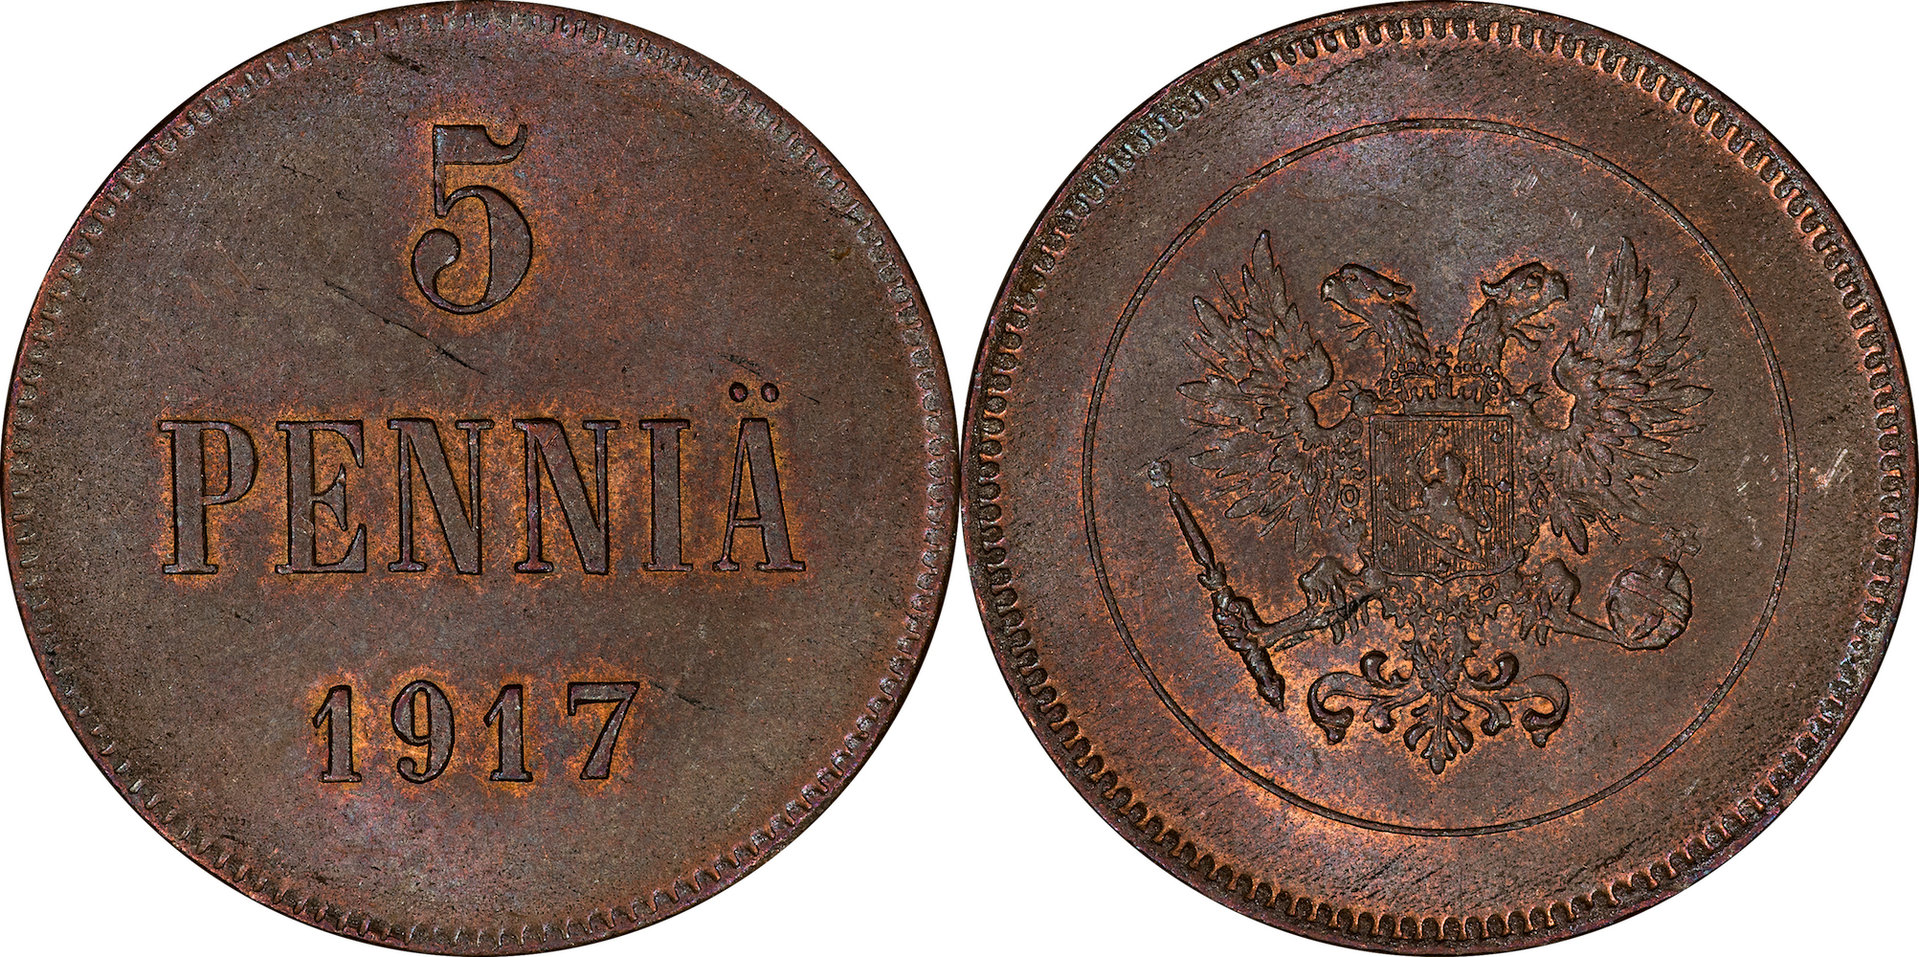 Finland - 1917 5 Pennia.jpg